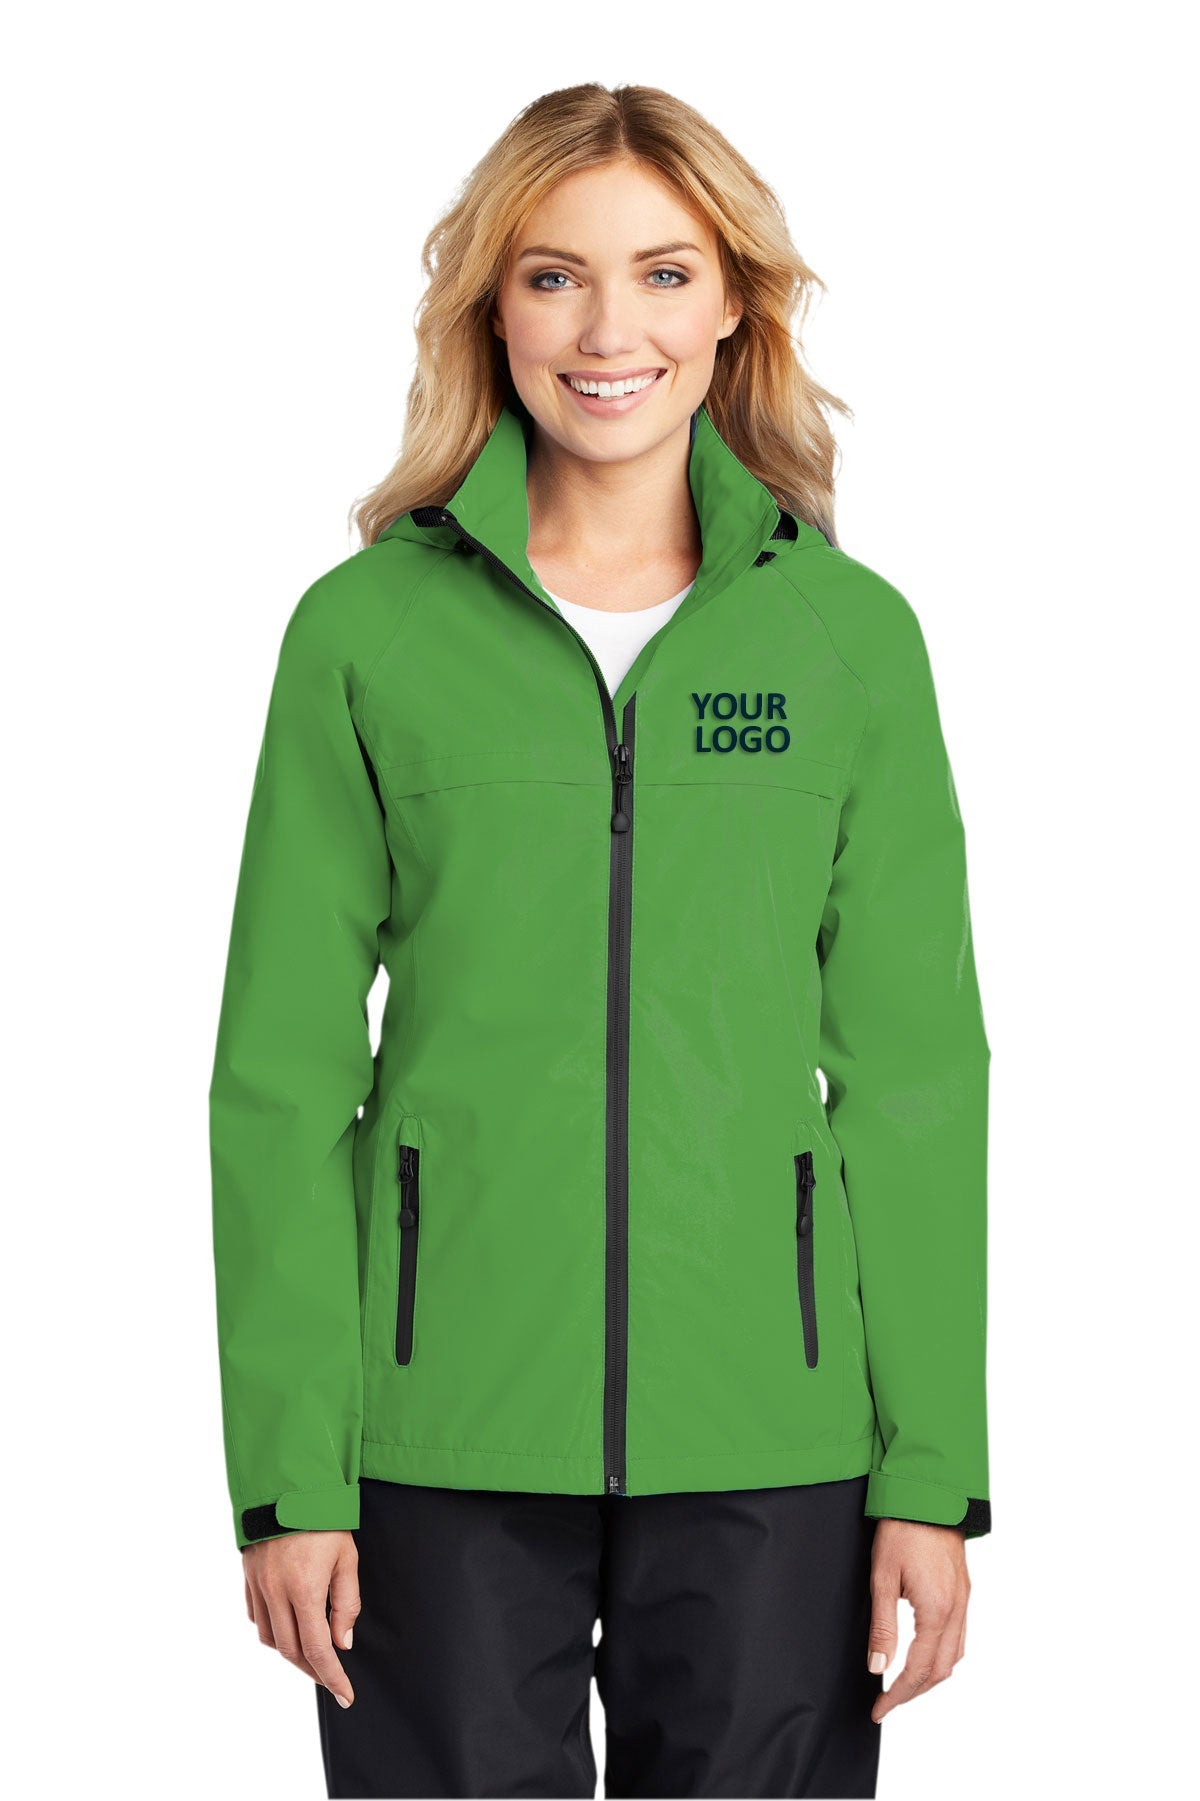 Port Authority Ladies Torrent Customized Waterproof Jackets, Vine Green